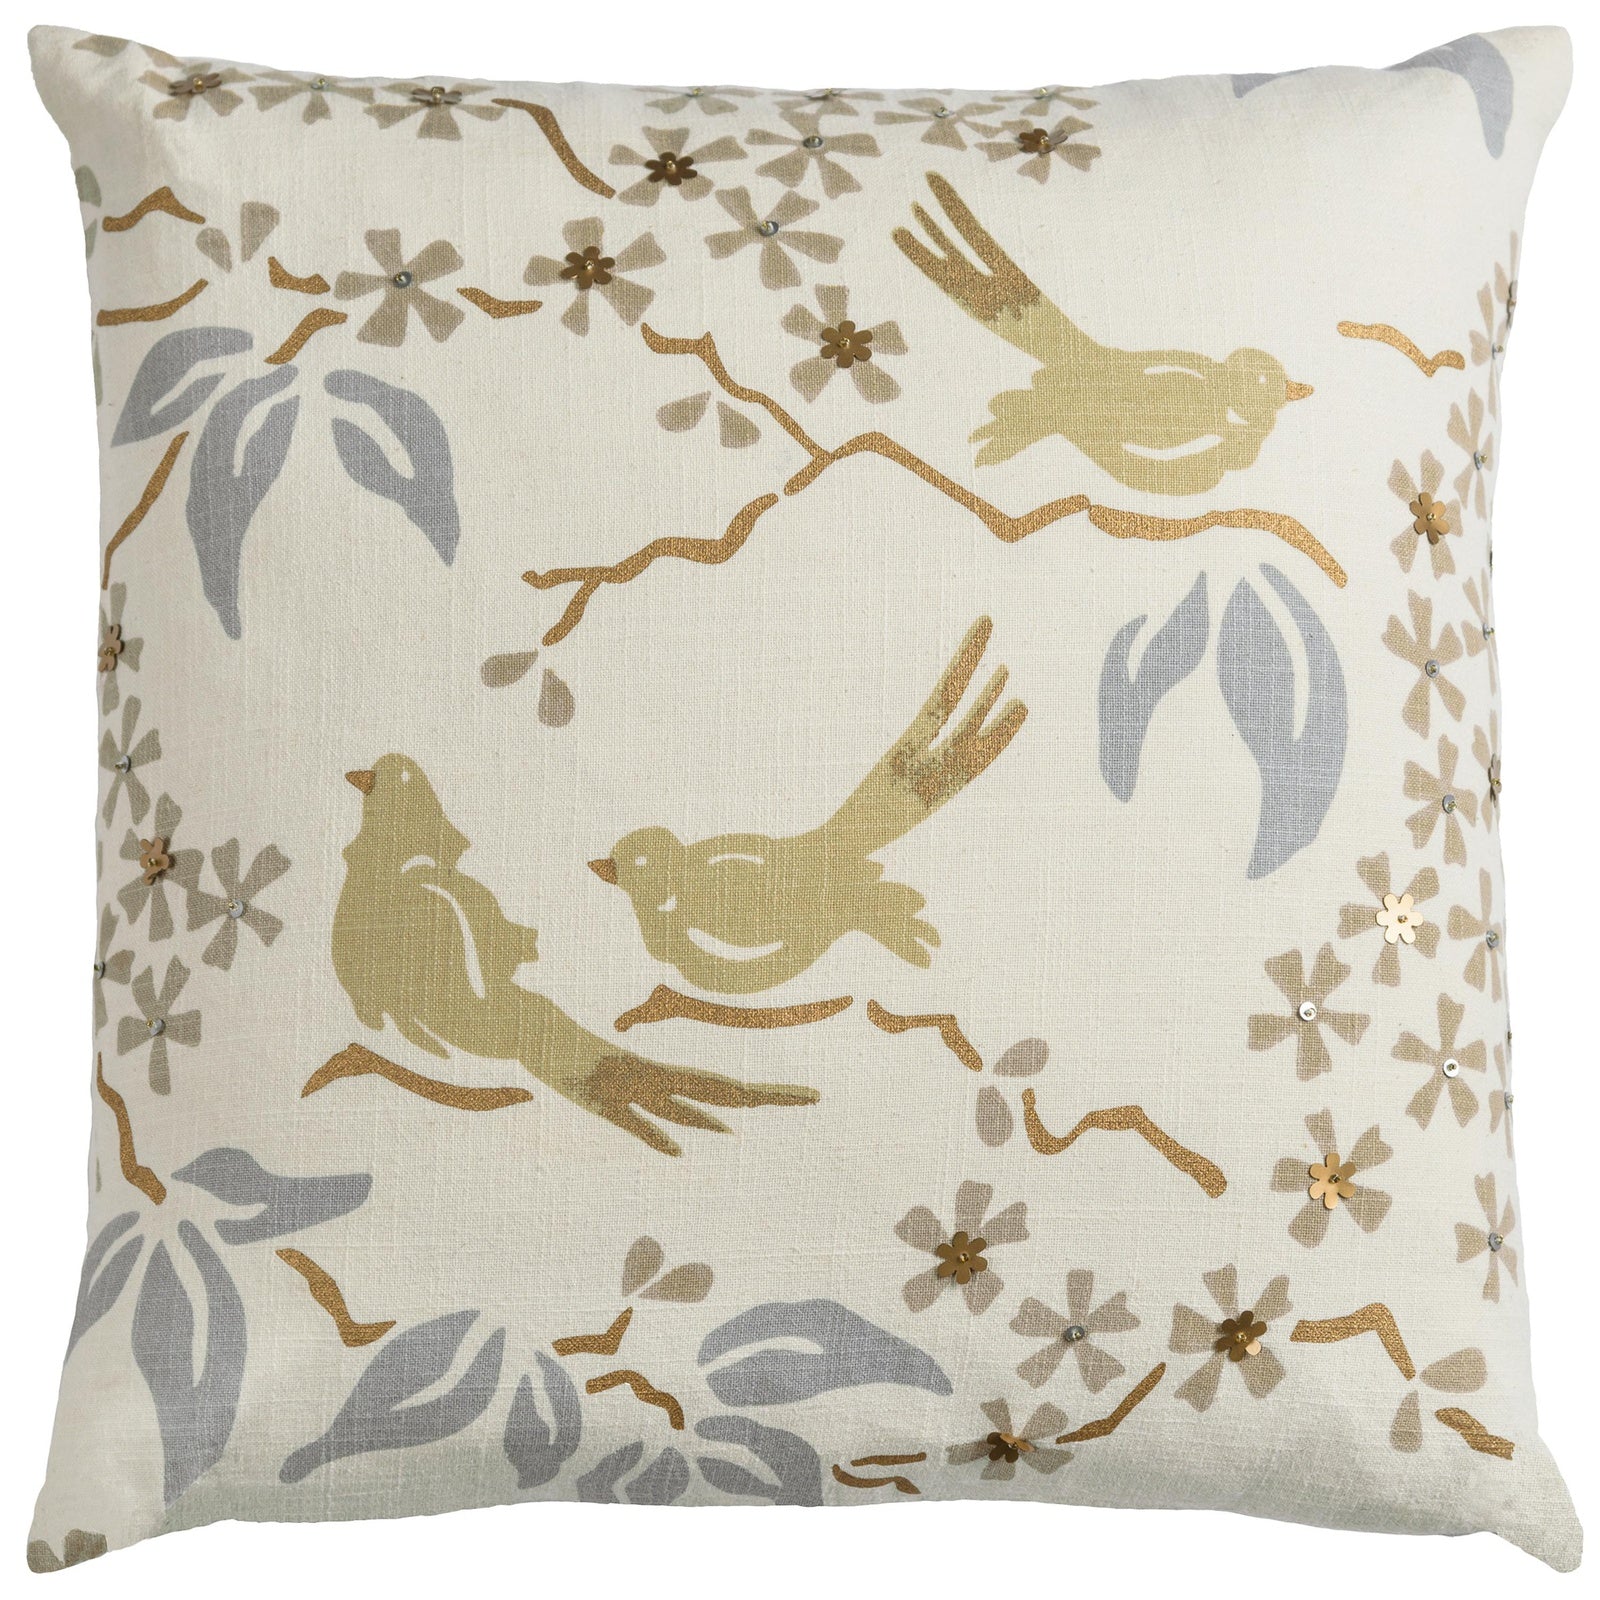 Floral Birds Printed Cotton Pillow Cover - Decorative Pillows